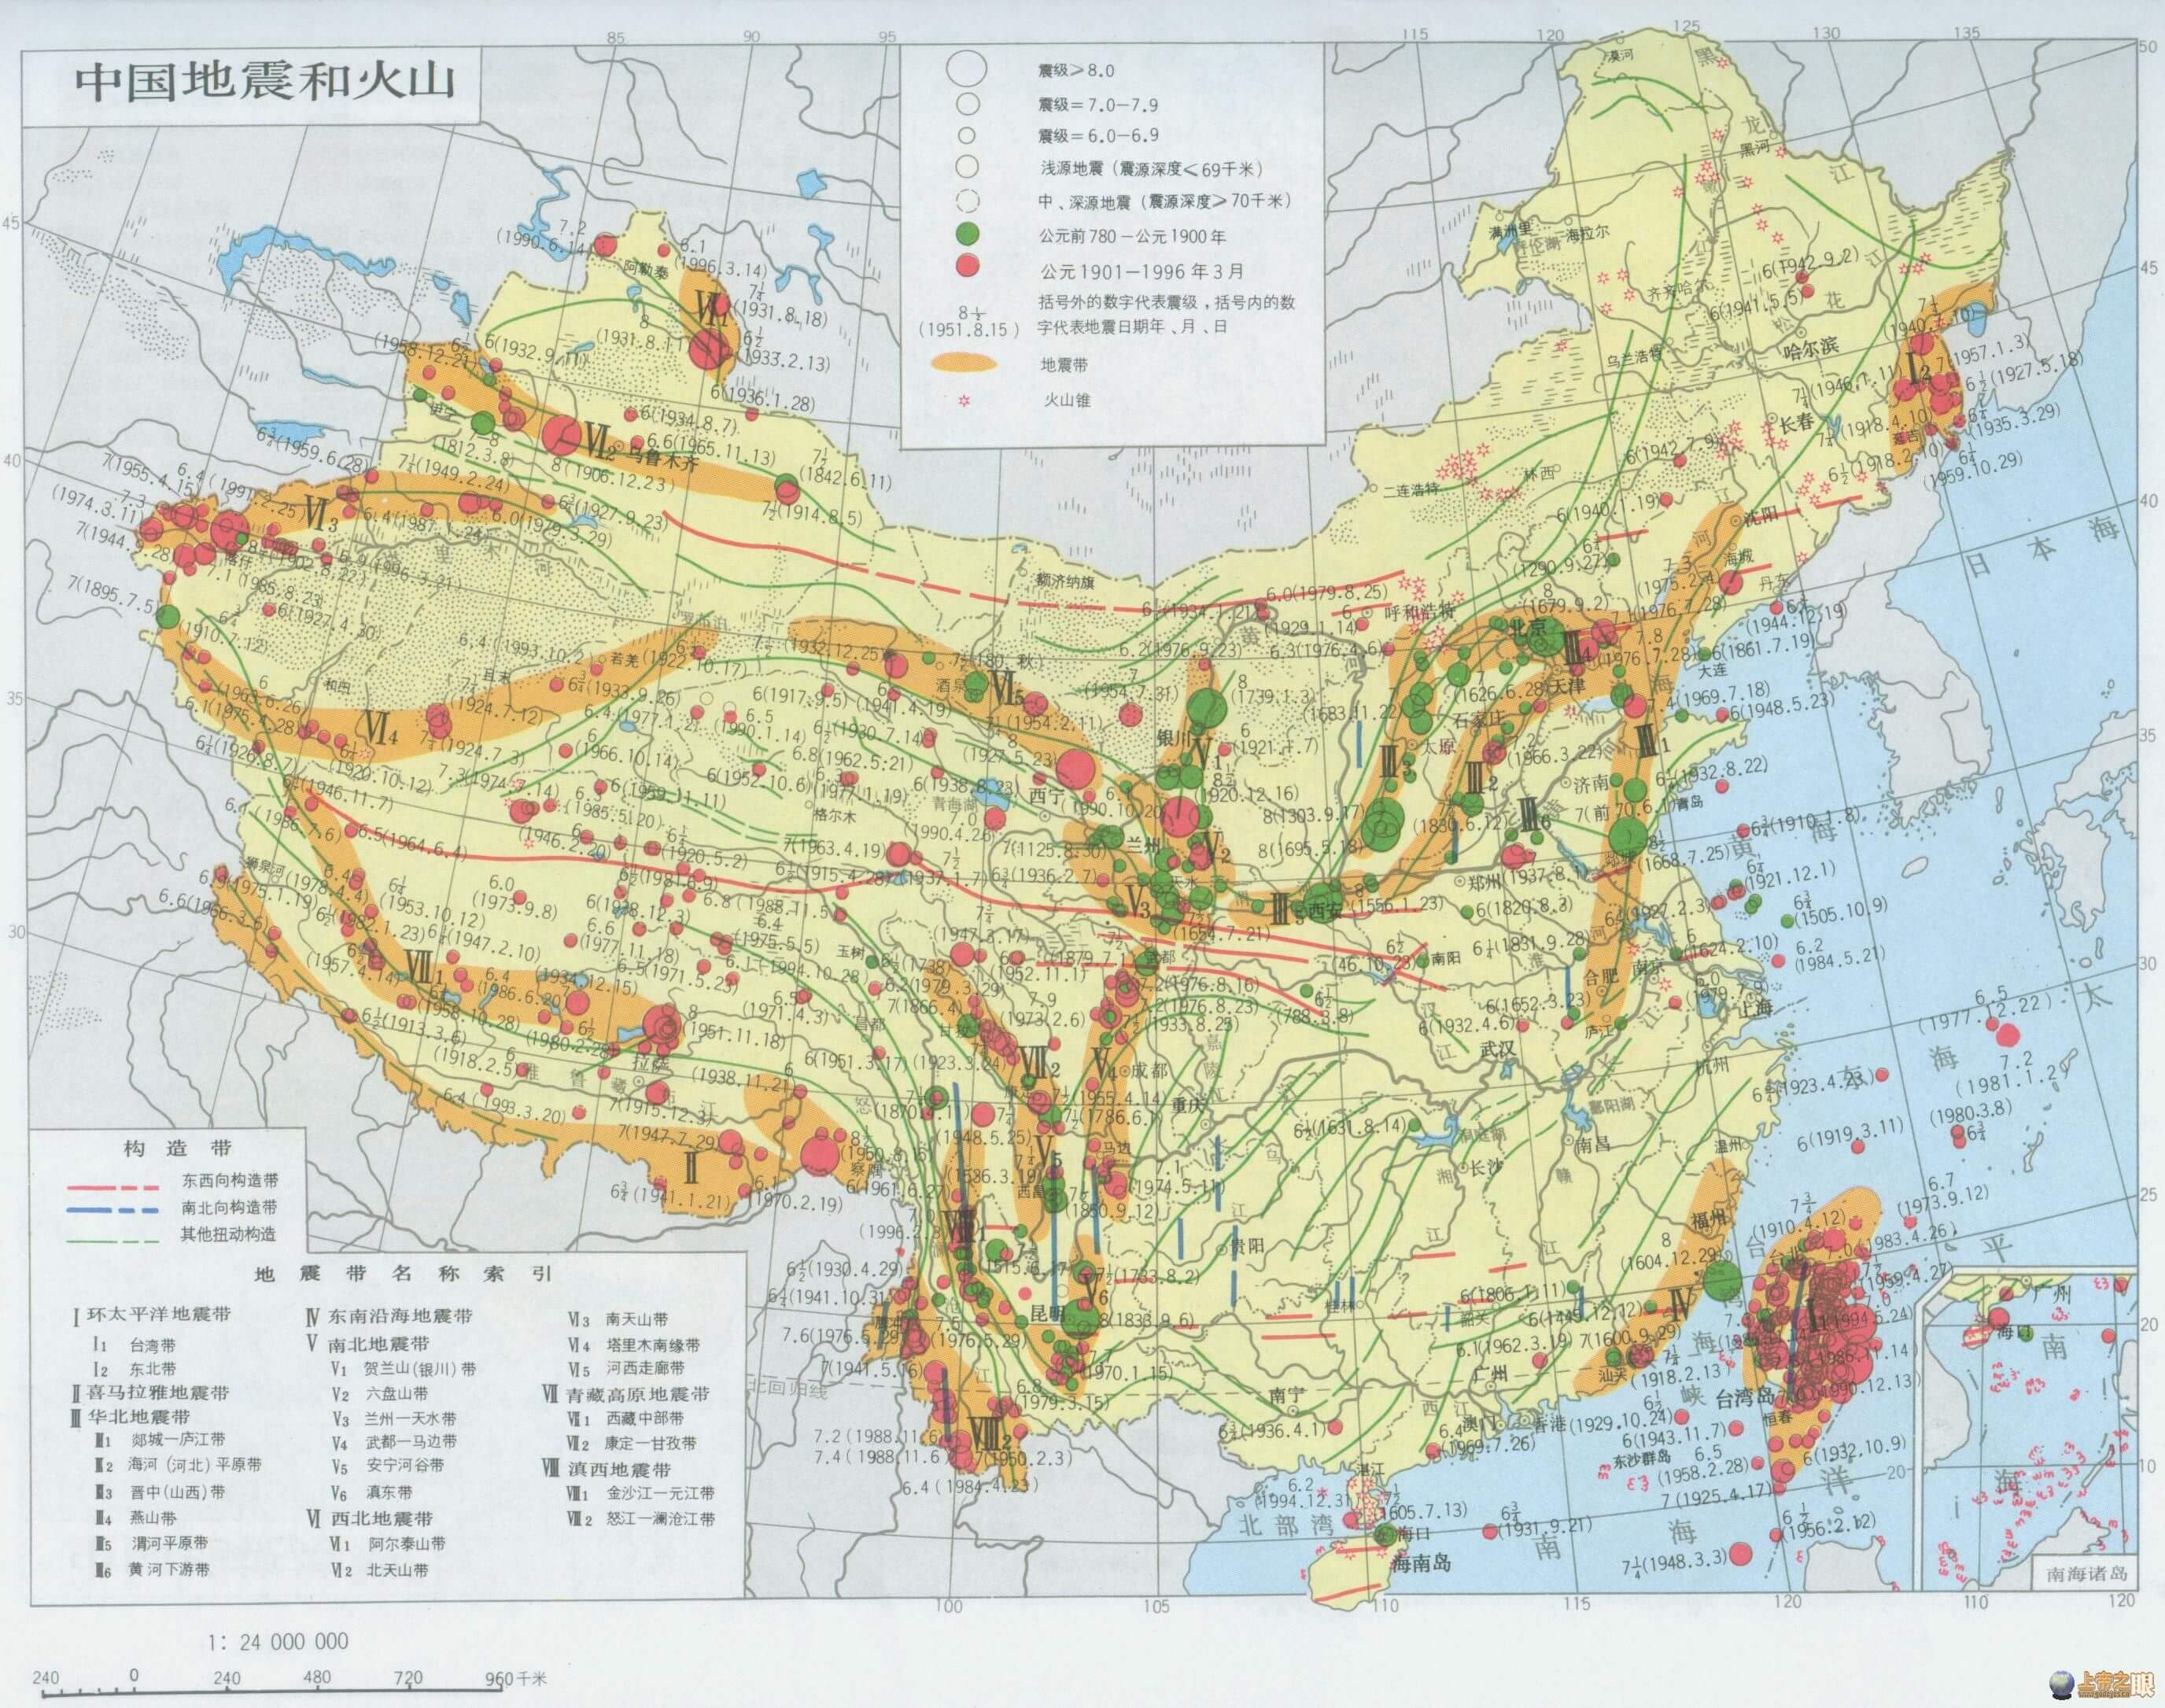 China Earthquakes Map